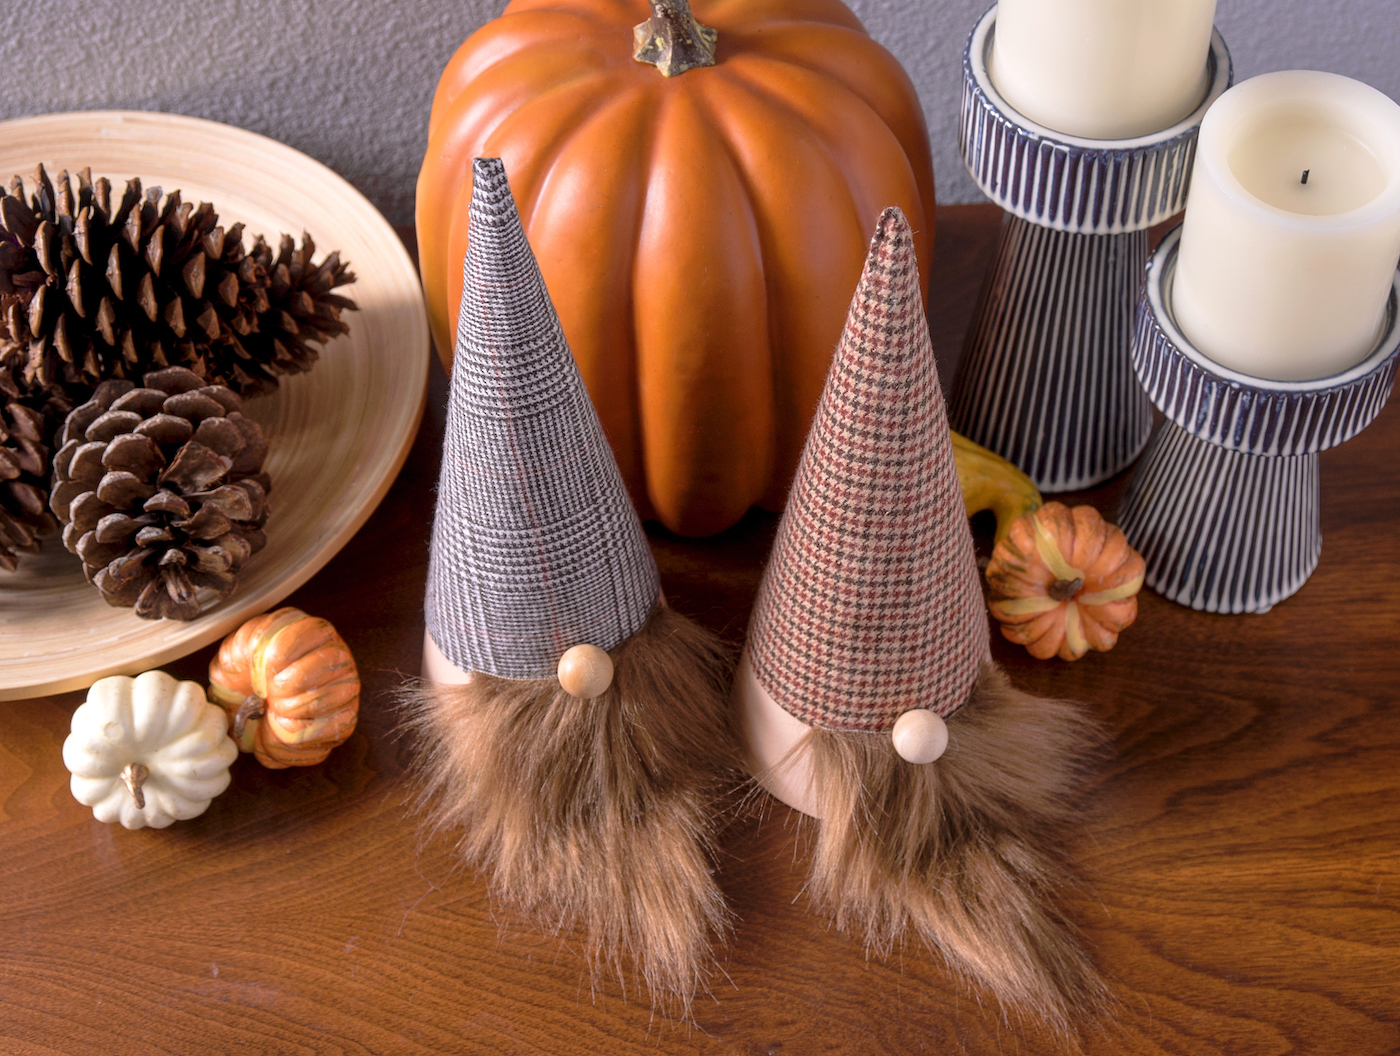 Make a Thanksgiving gnome